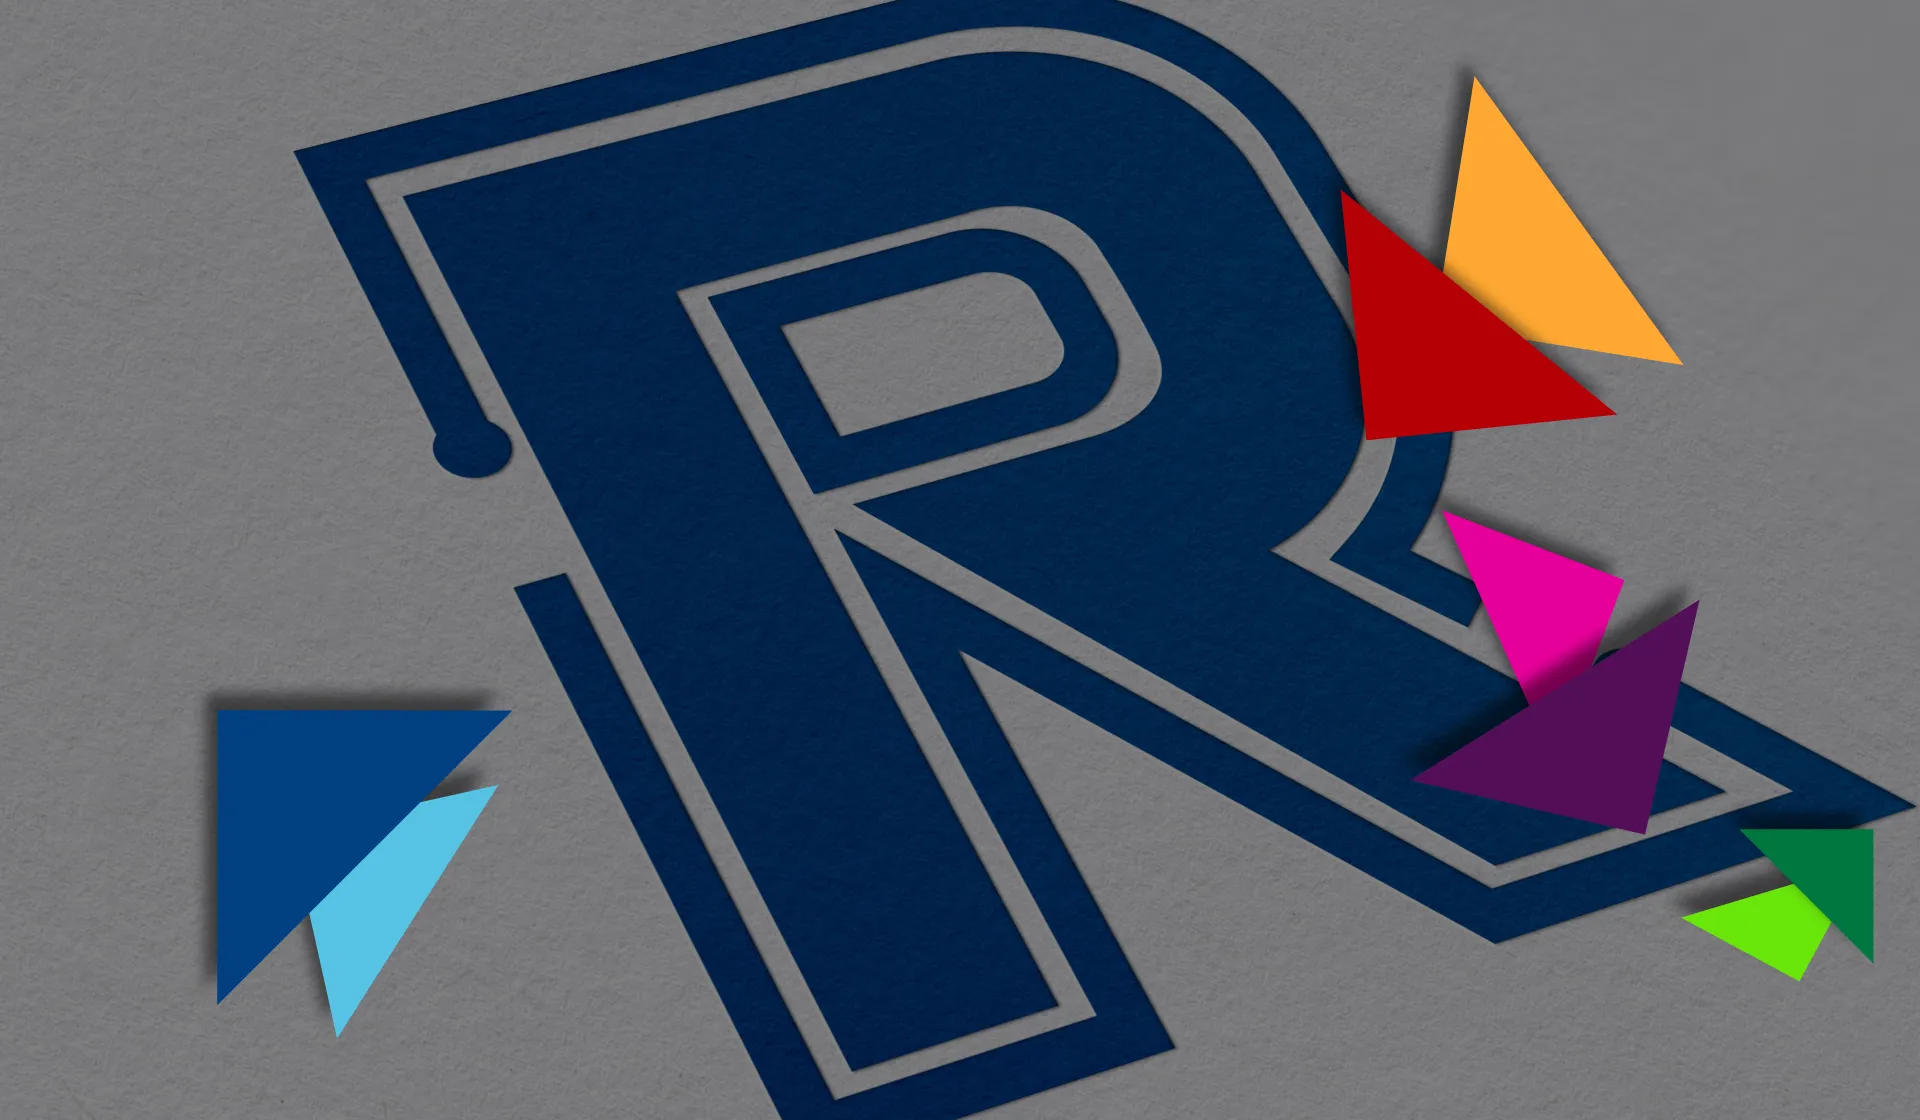 Rozmar company logo latter R